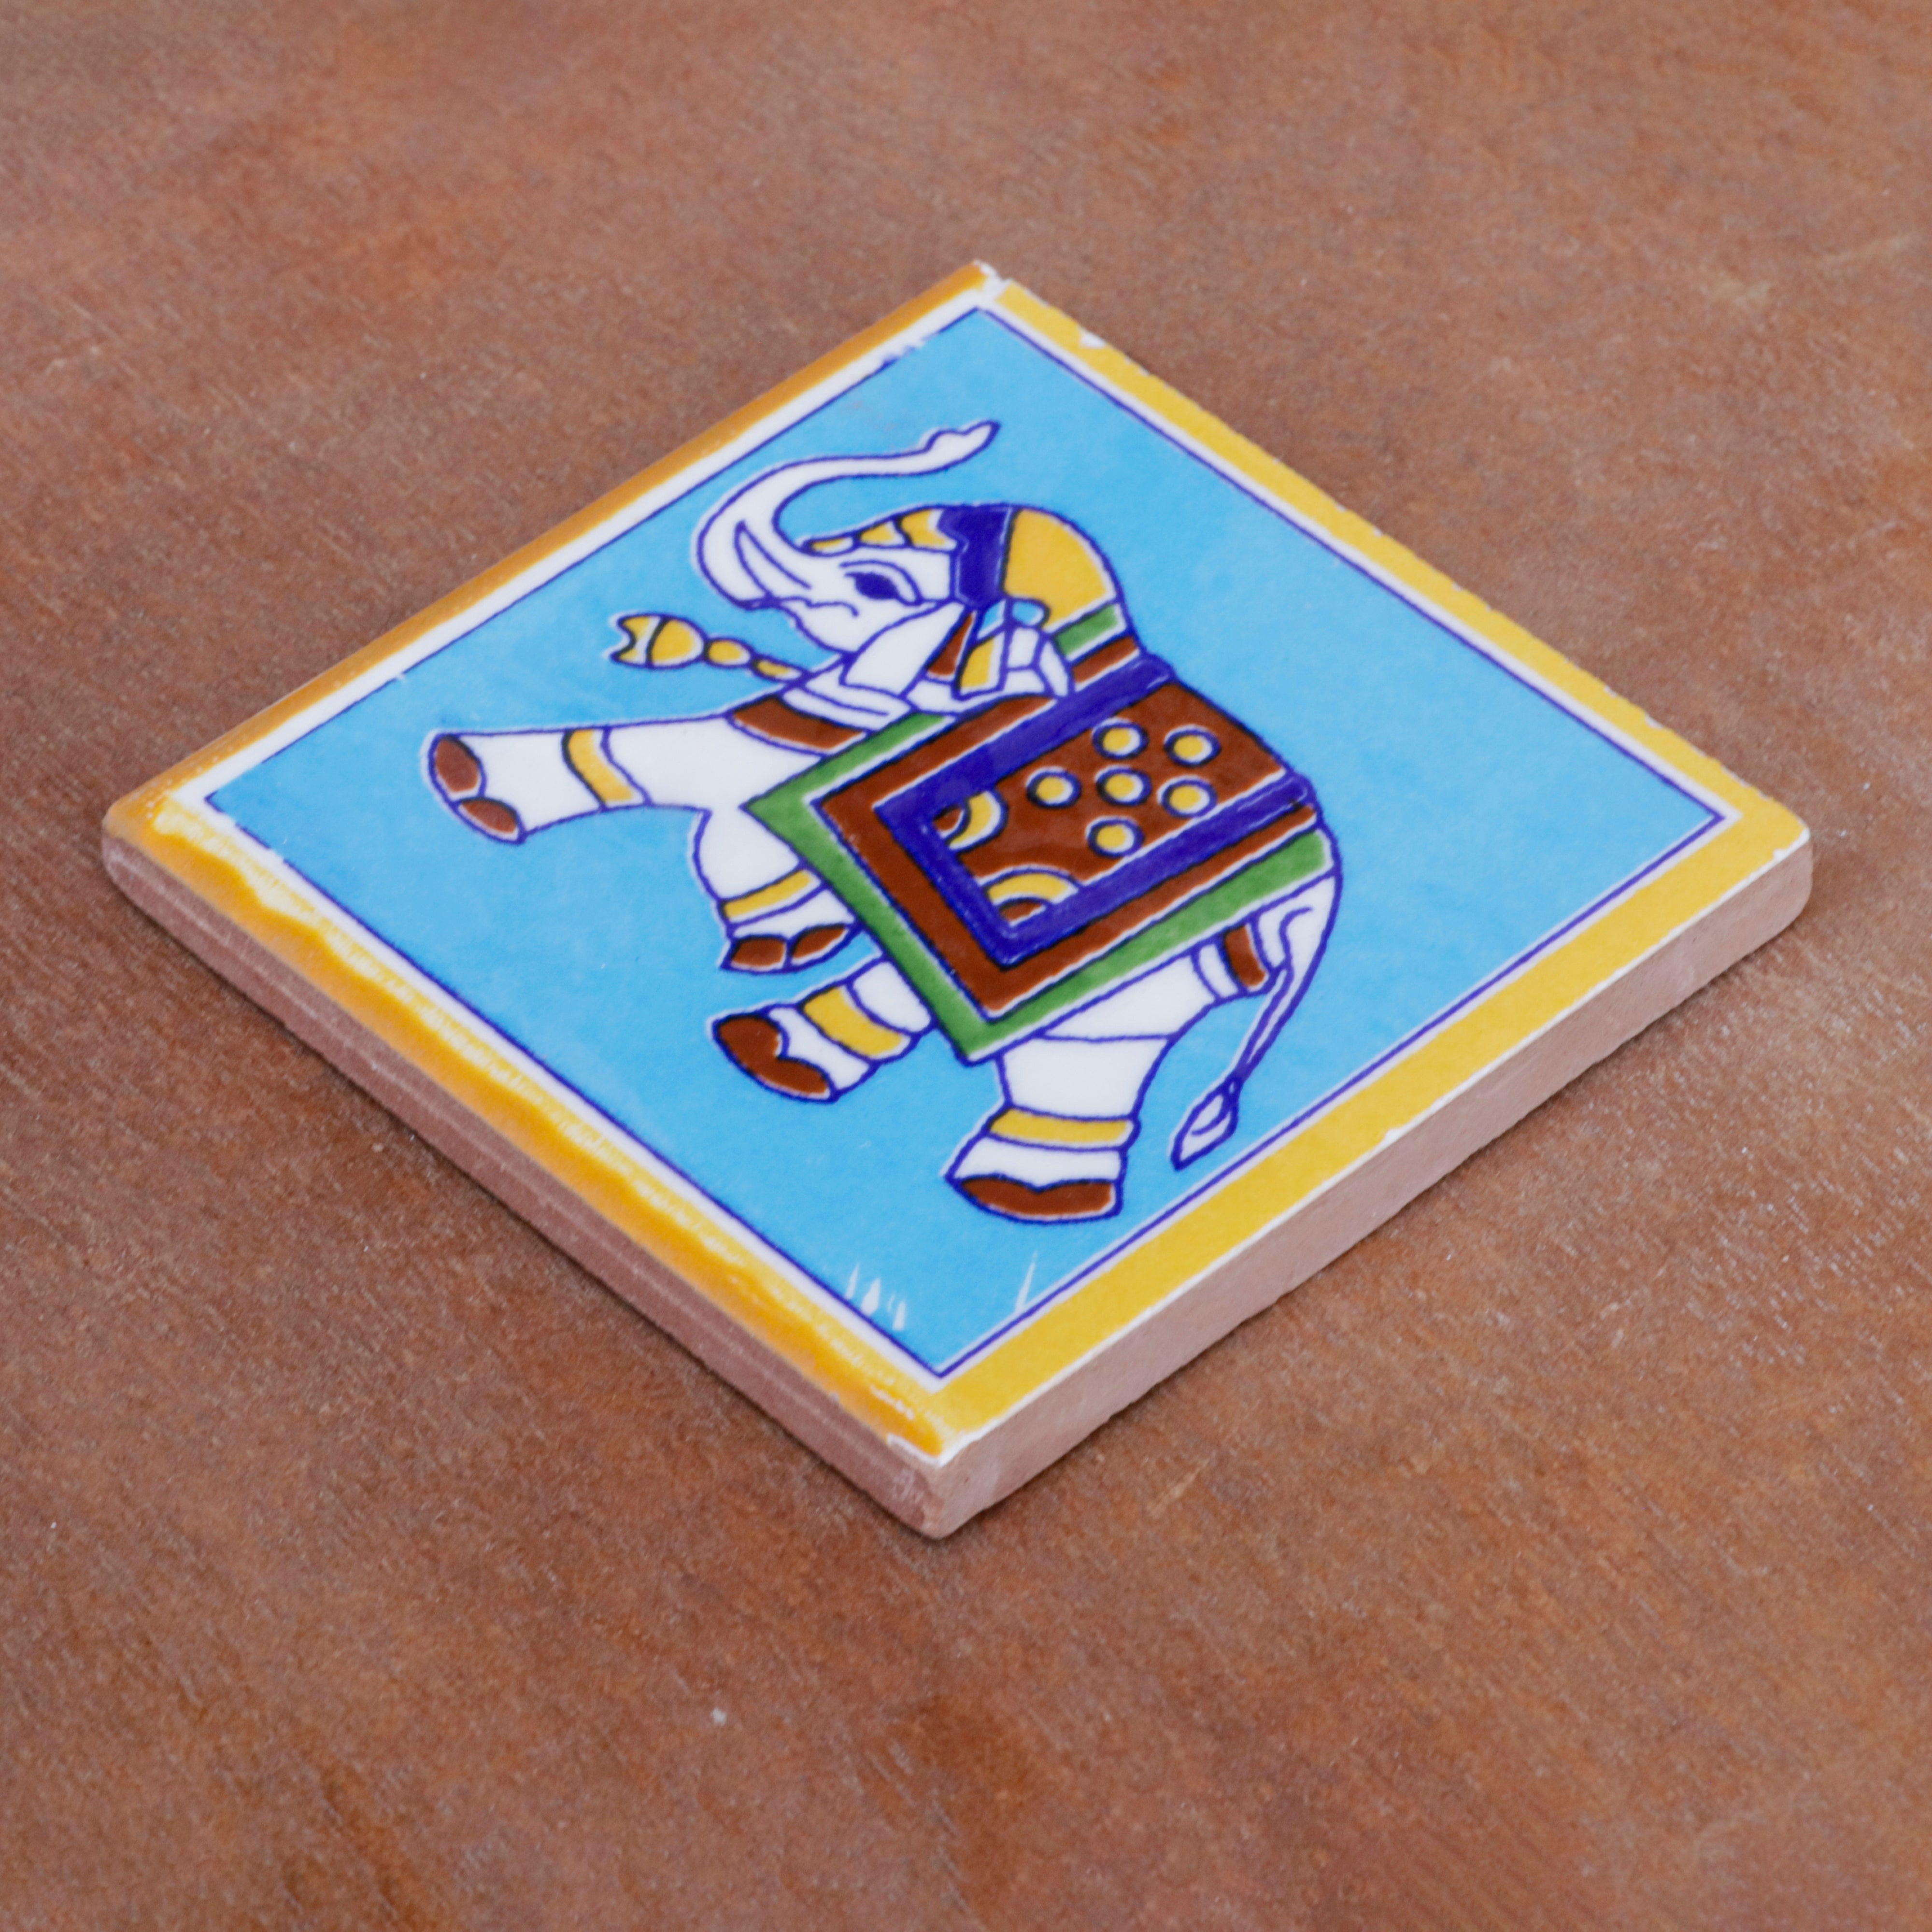 Erotic Traditional Style Elephant Designed Ceramic Square Tile Set of 2 Ceramic Tile